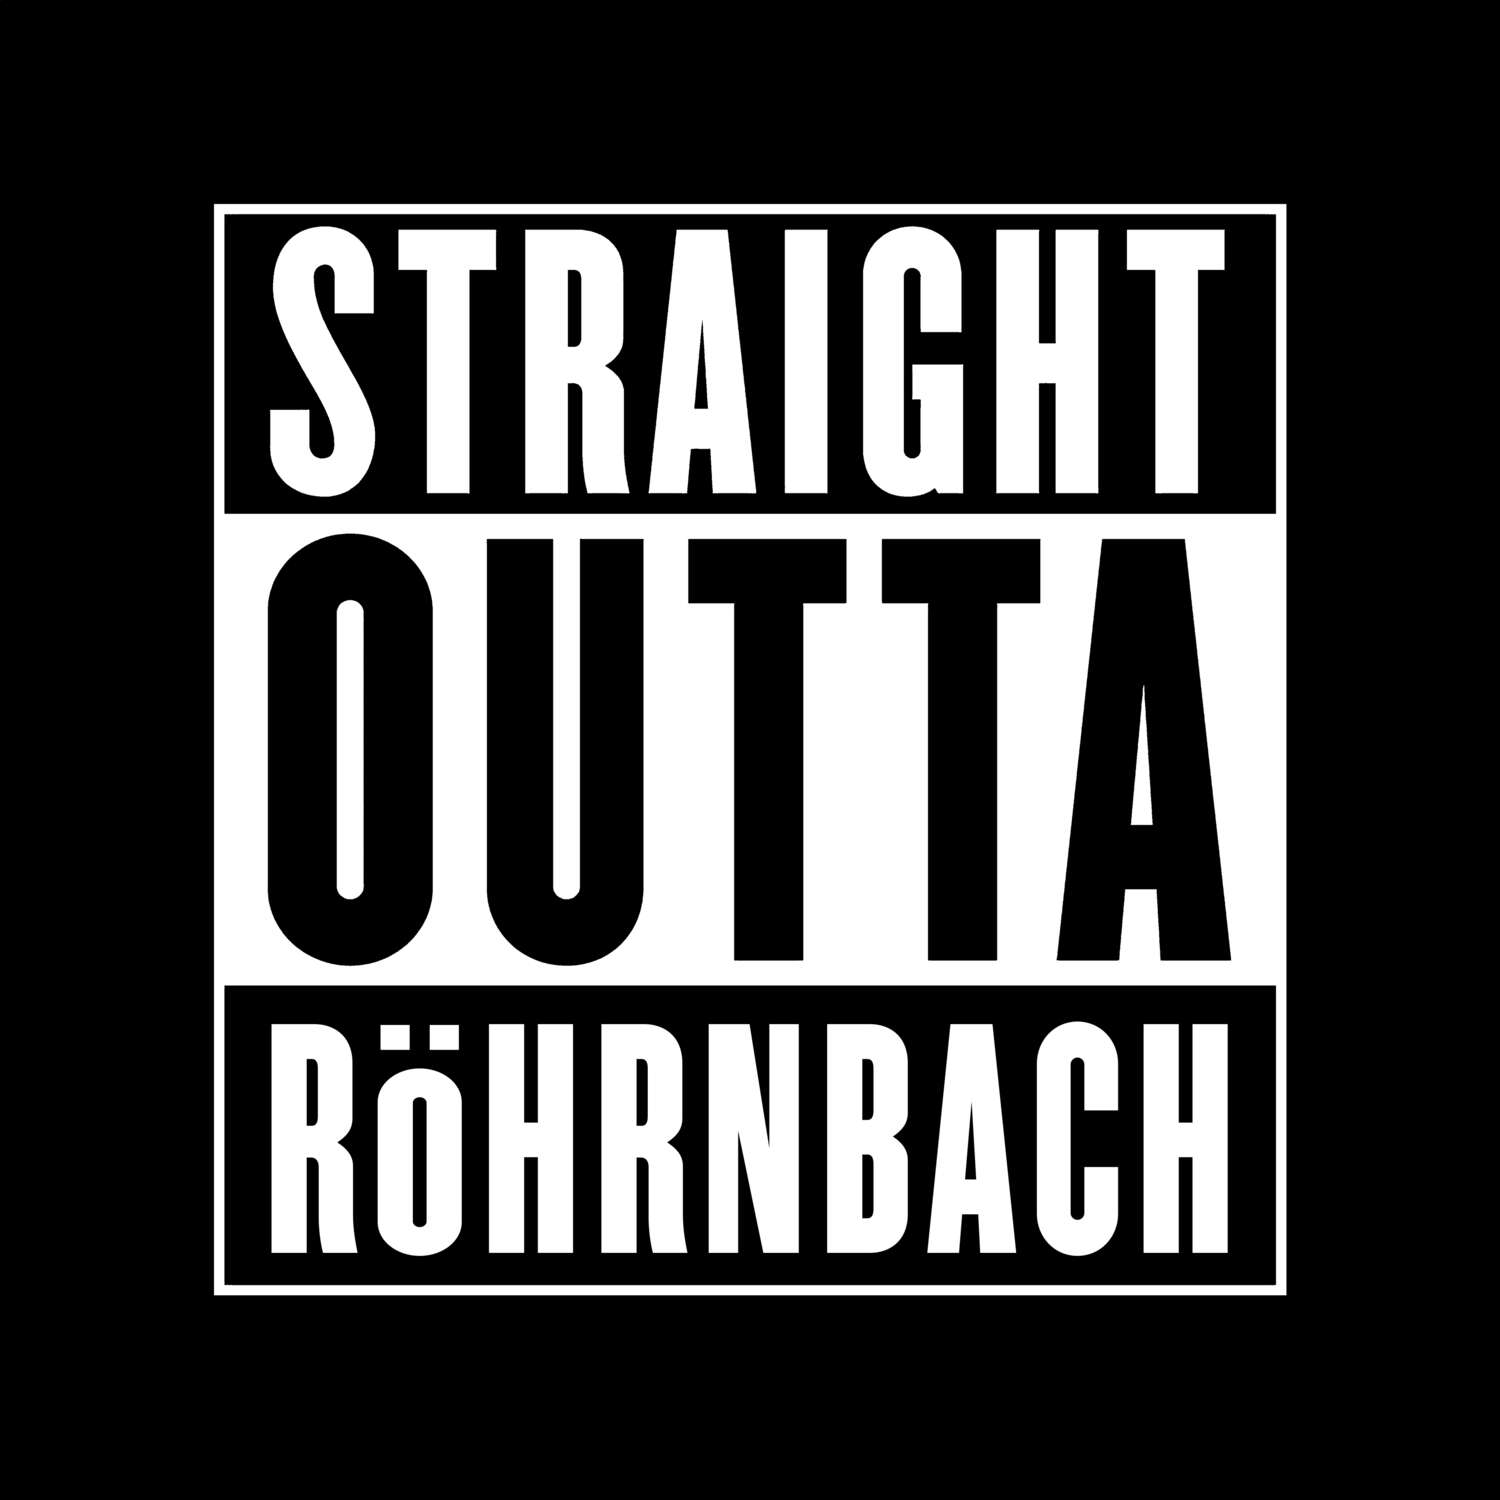 Röhrnbach T-Shirt »Straight Outta«